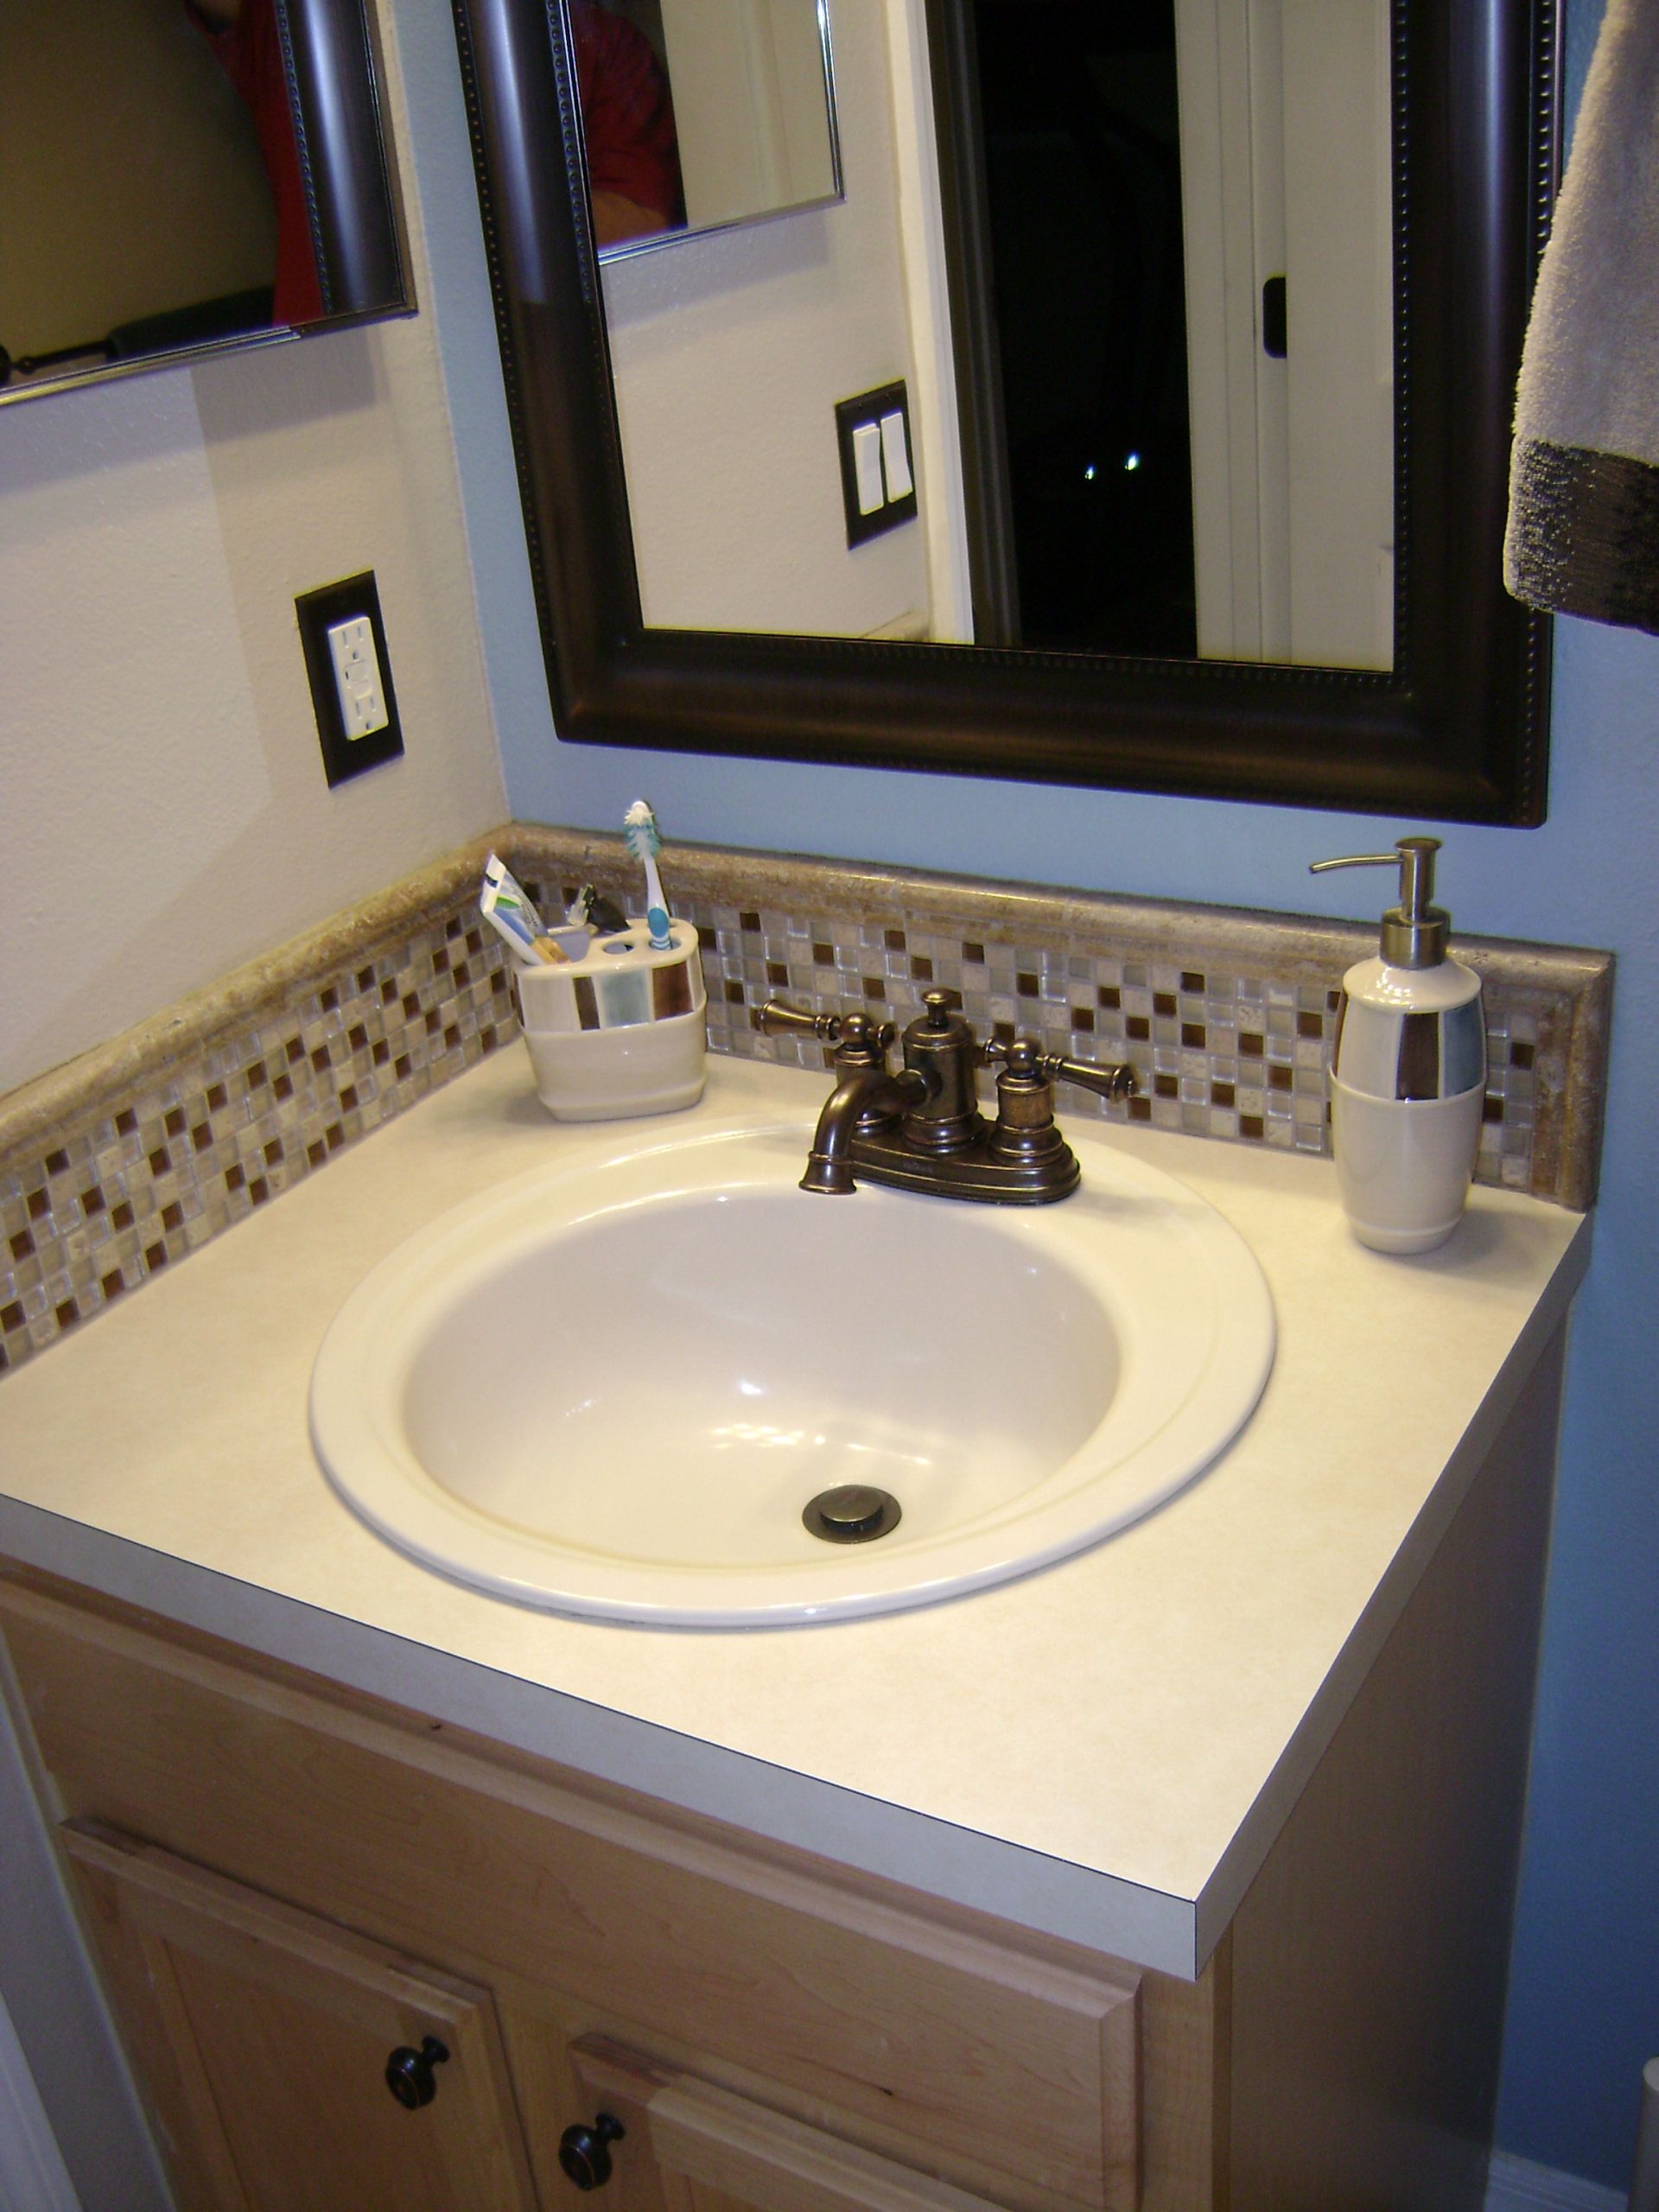 Bathroom Sink Backsplash Ideas
 93 Awesome Flat Bathroom Sinks Picture Ideas